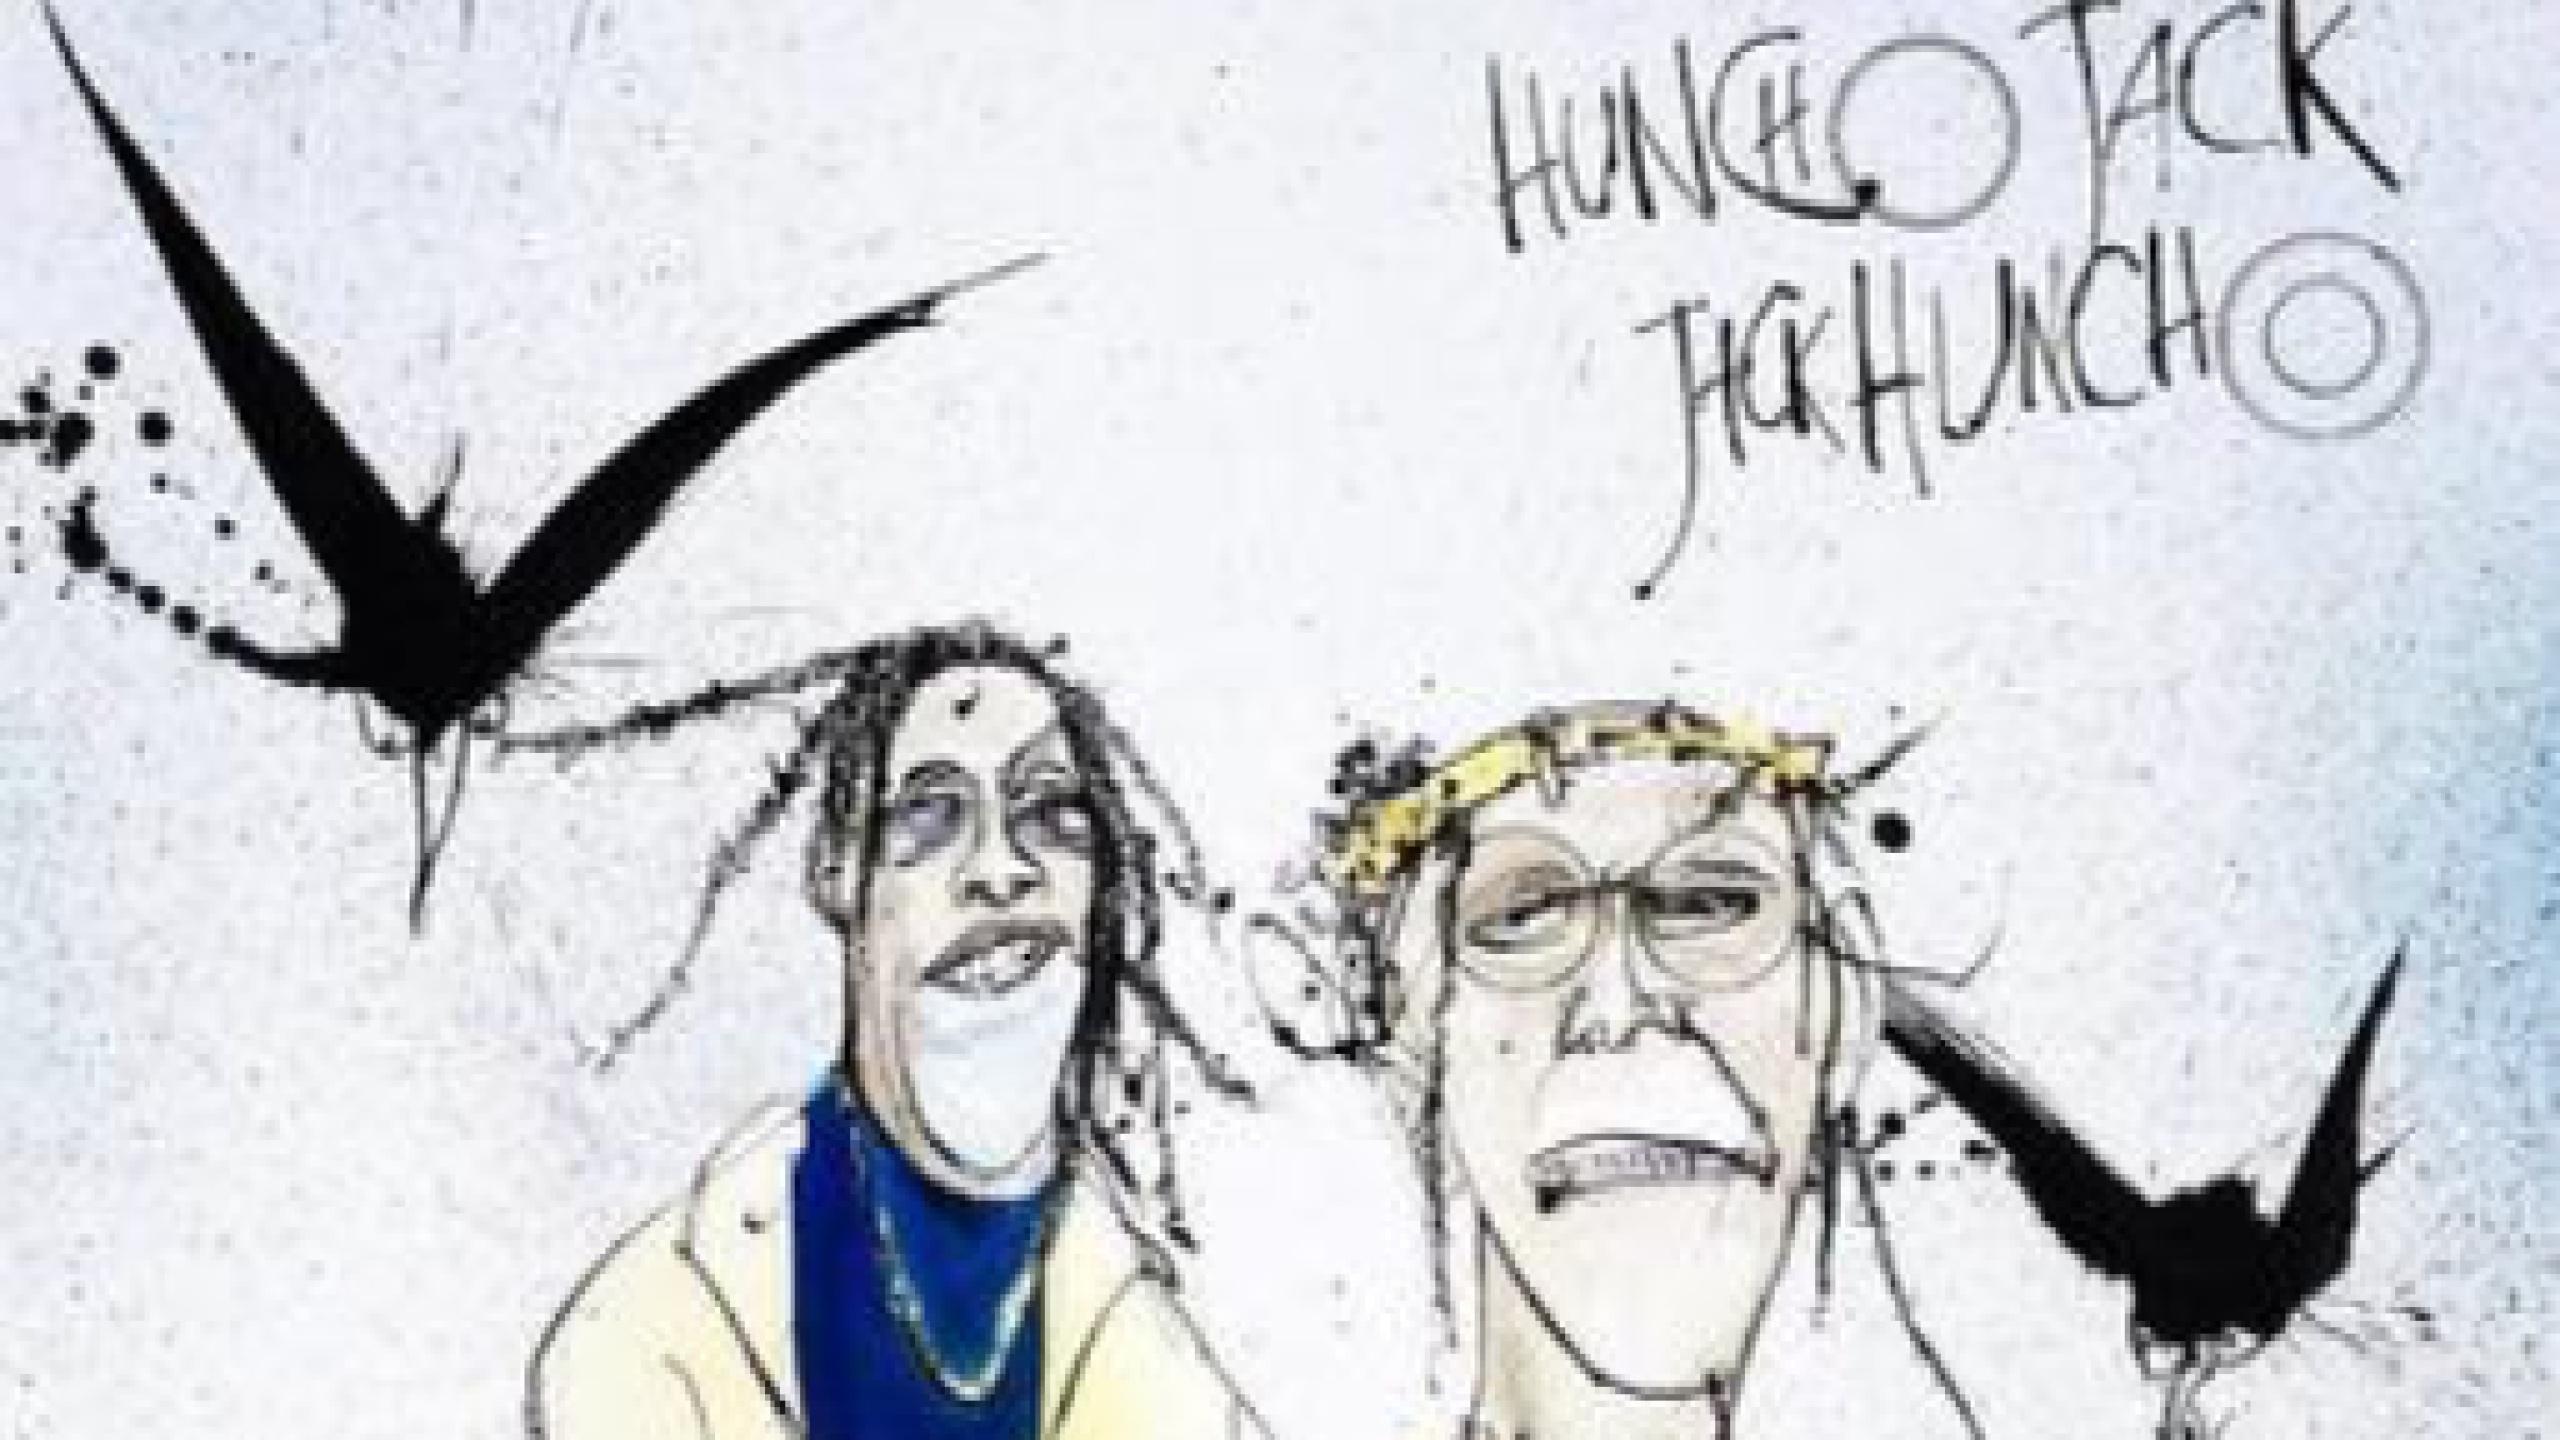 Quavo and Travis Scott Releases Huncho Jack, Jack Huncho Album